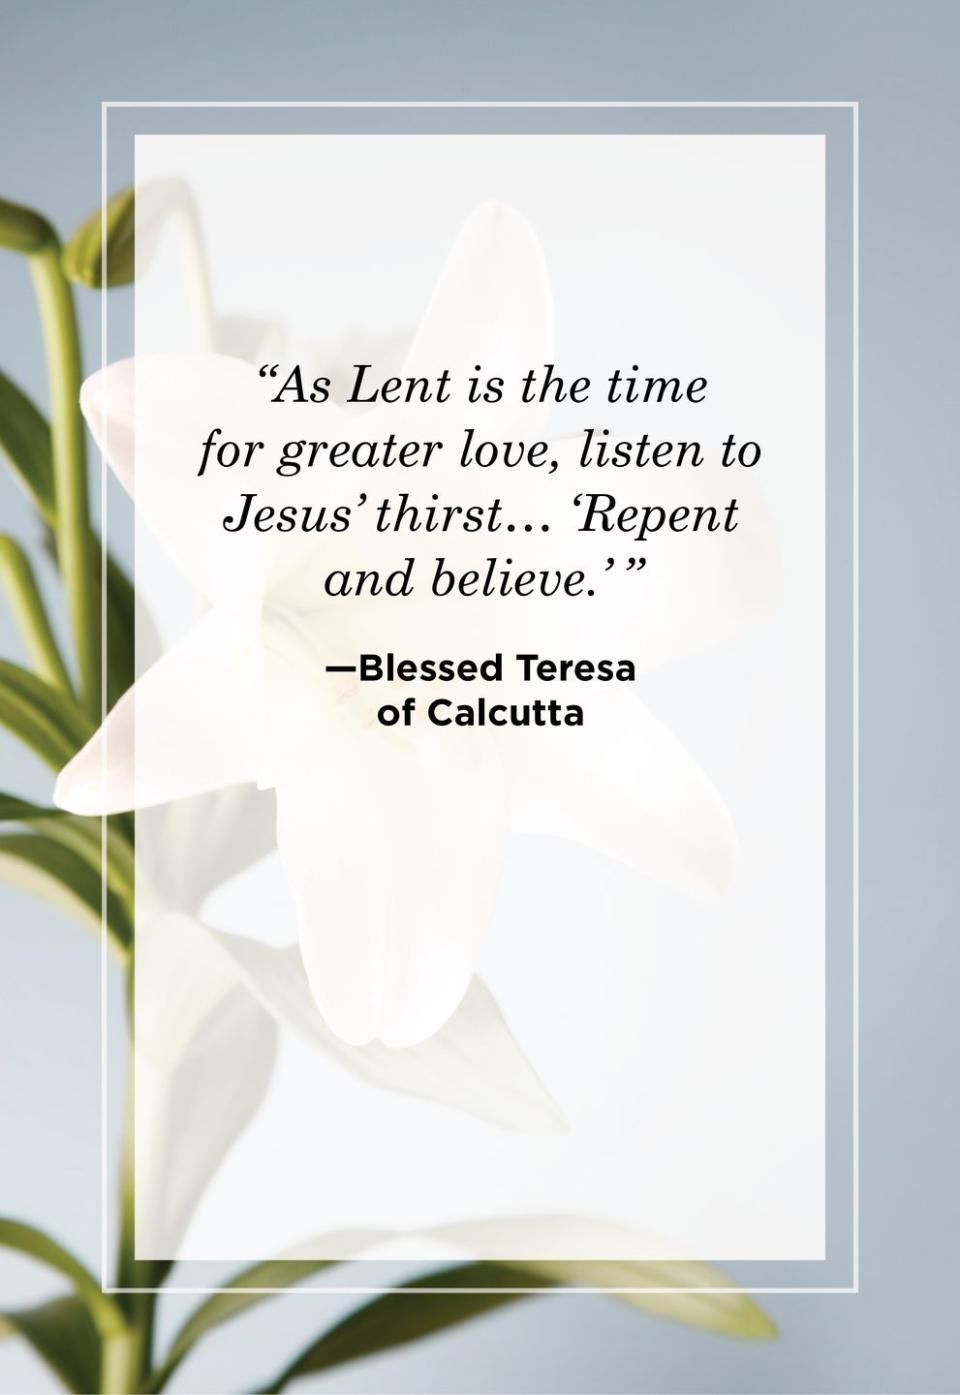 33) Blessed Teresa of Calcutta